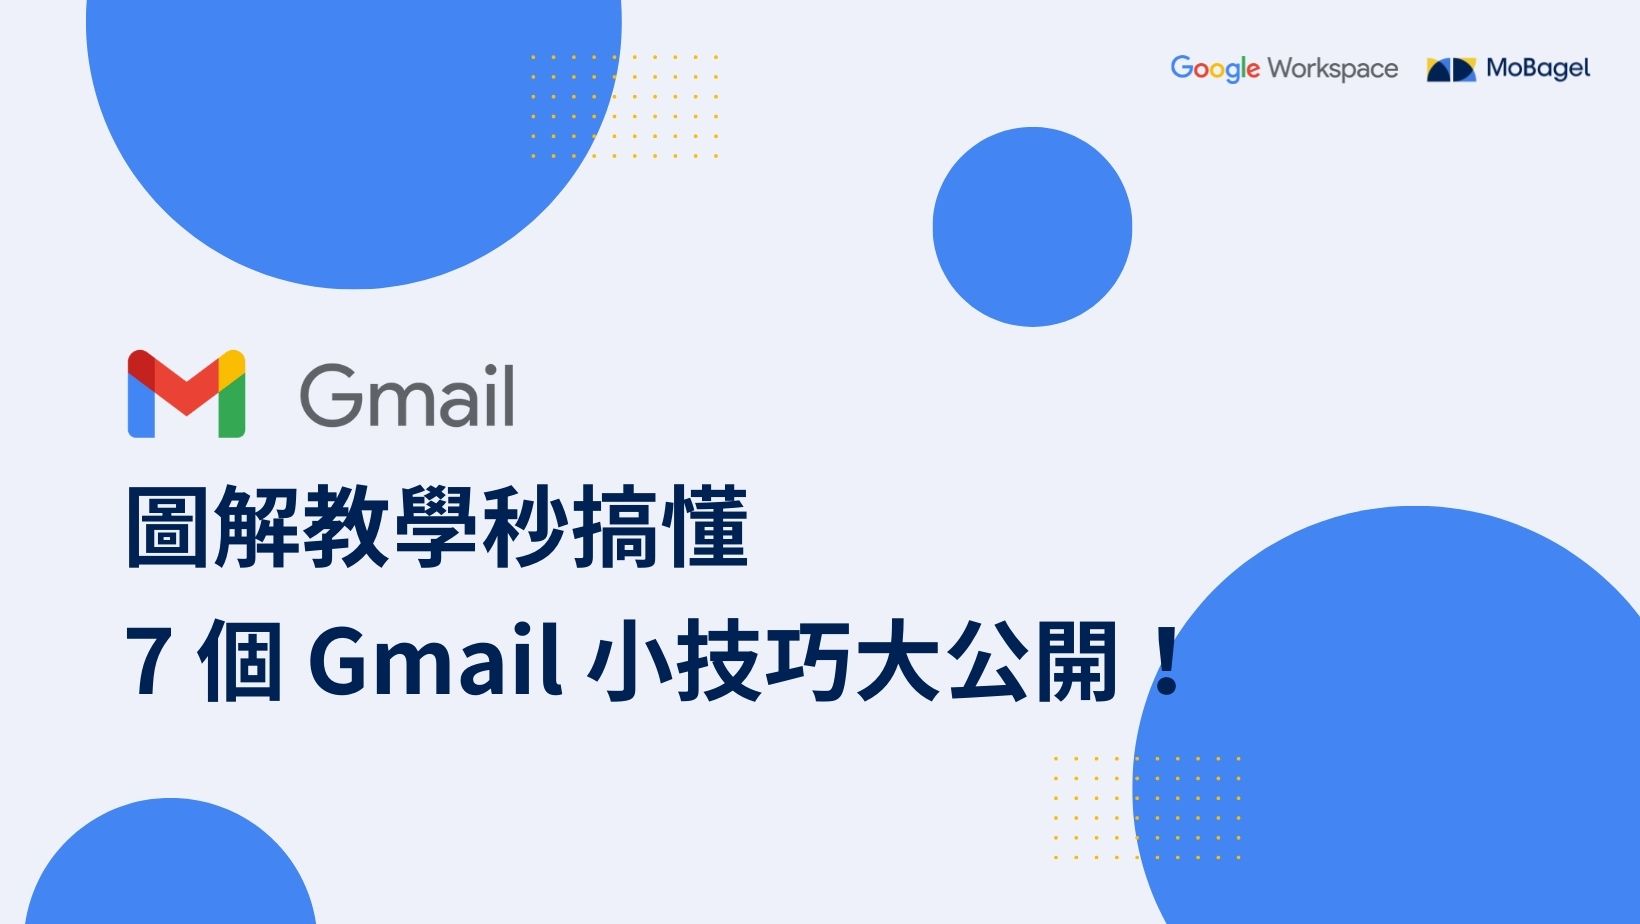 gws-gmail-top